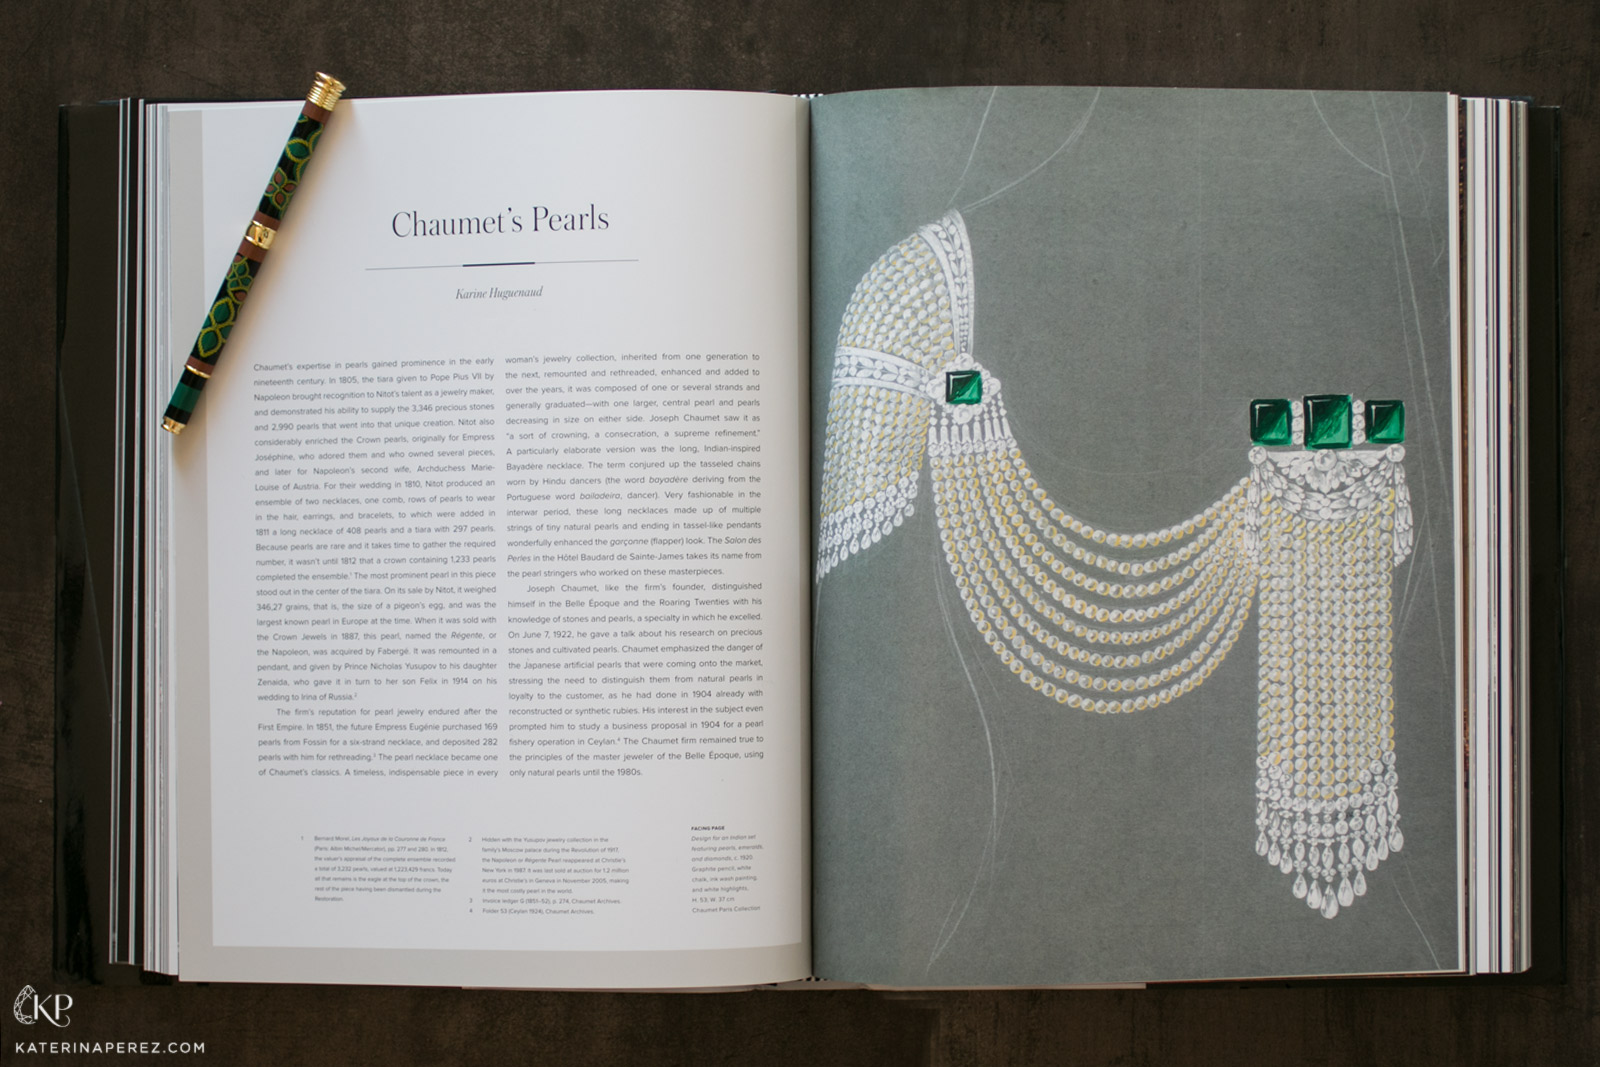 "Chaumet: Parisian Jeweller since 1780" book